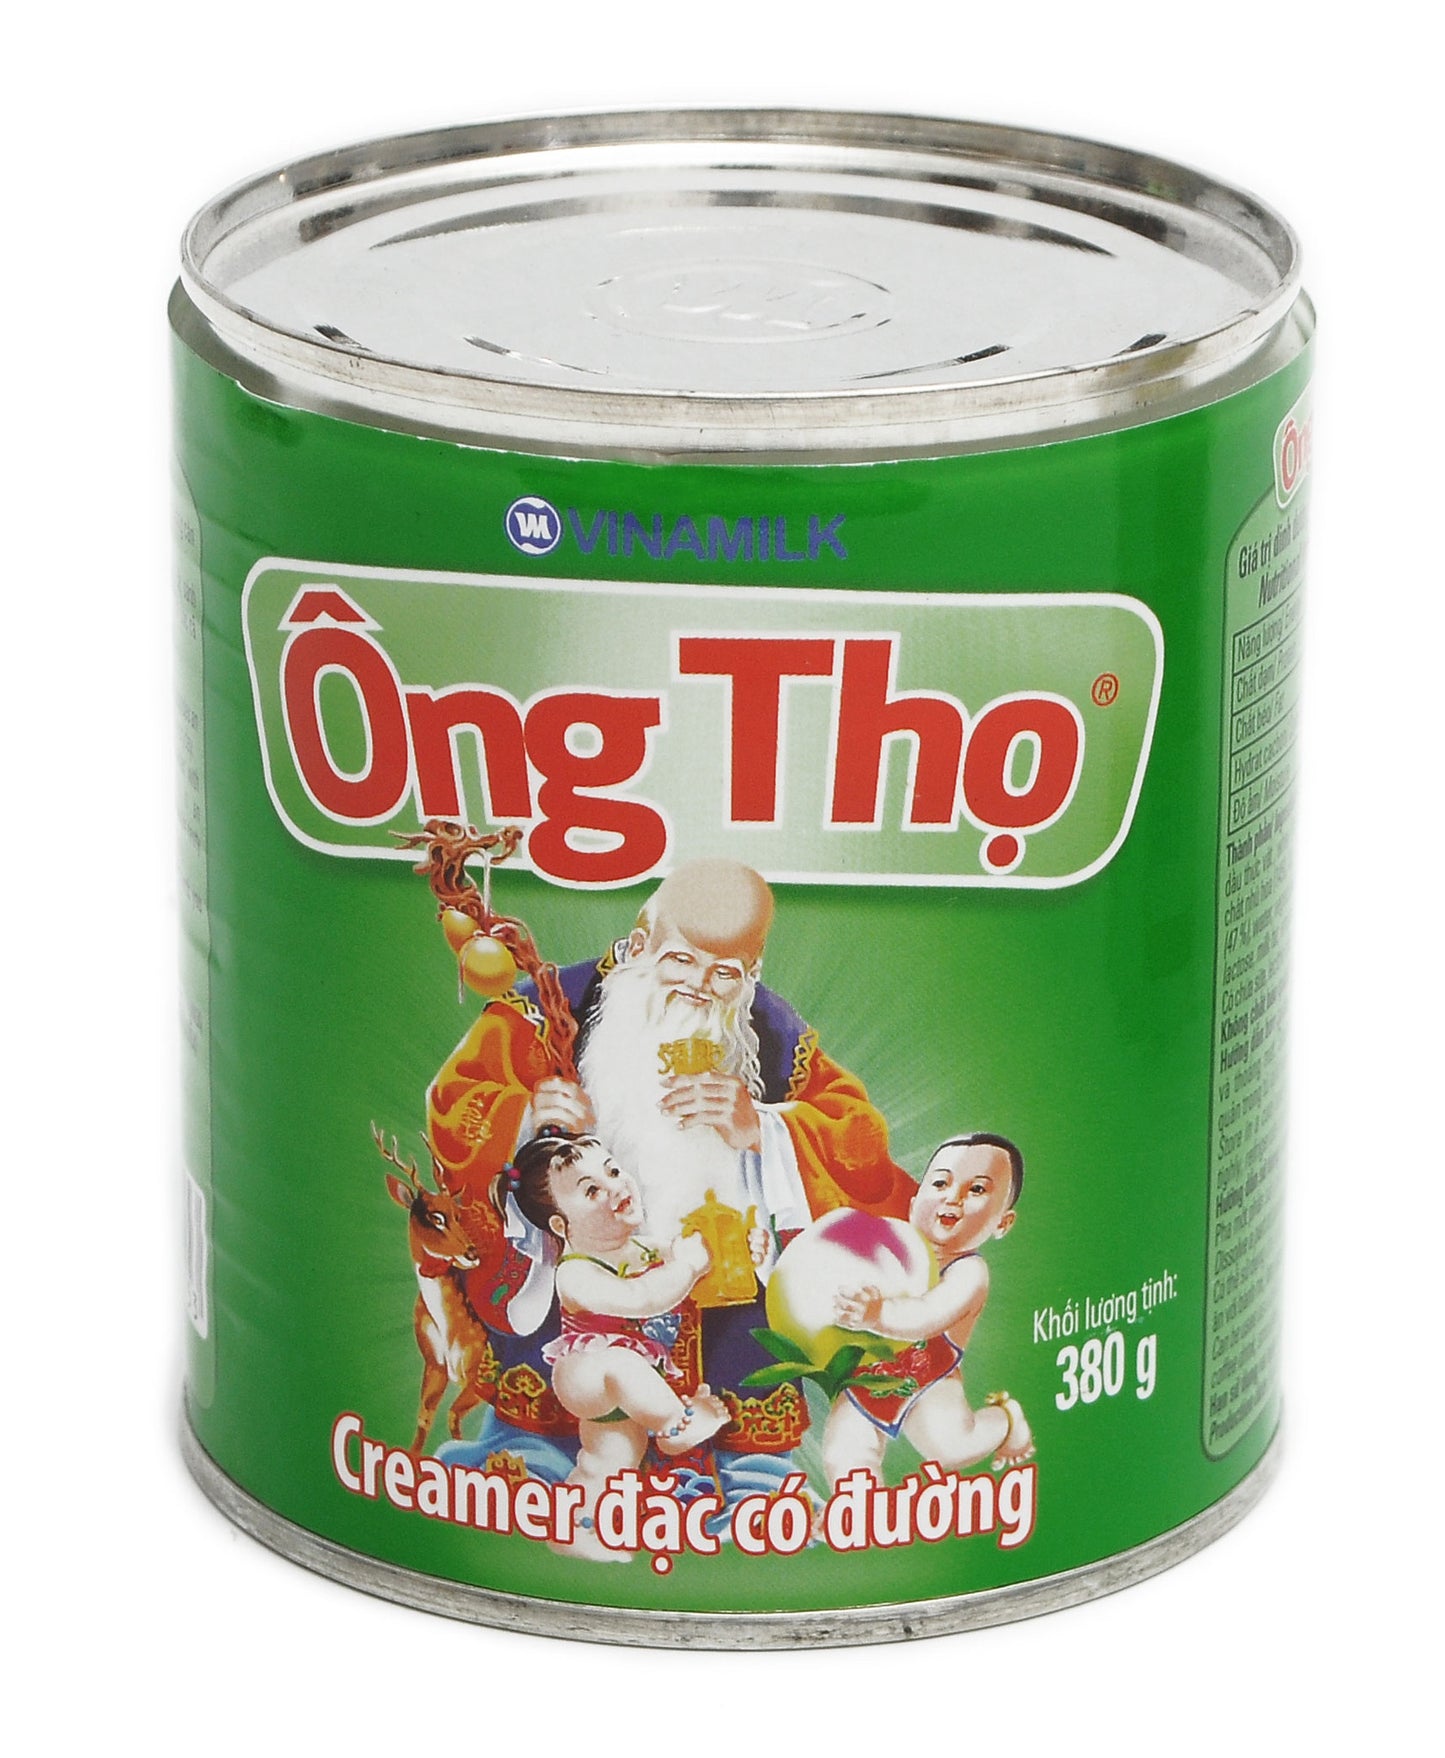 Vinamilk Ong Tho Sweetened Condense Milk Ngoi Sao Can Vietnamese Iced Coffee 380 Grams